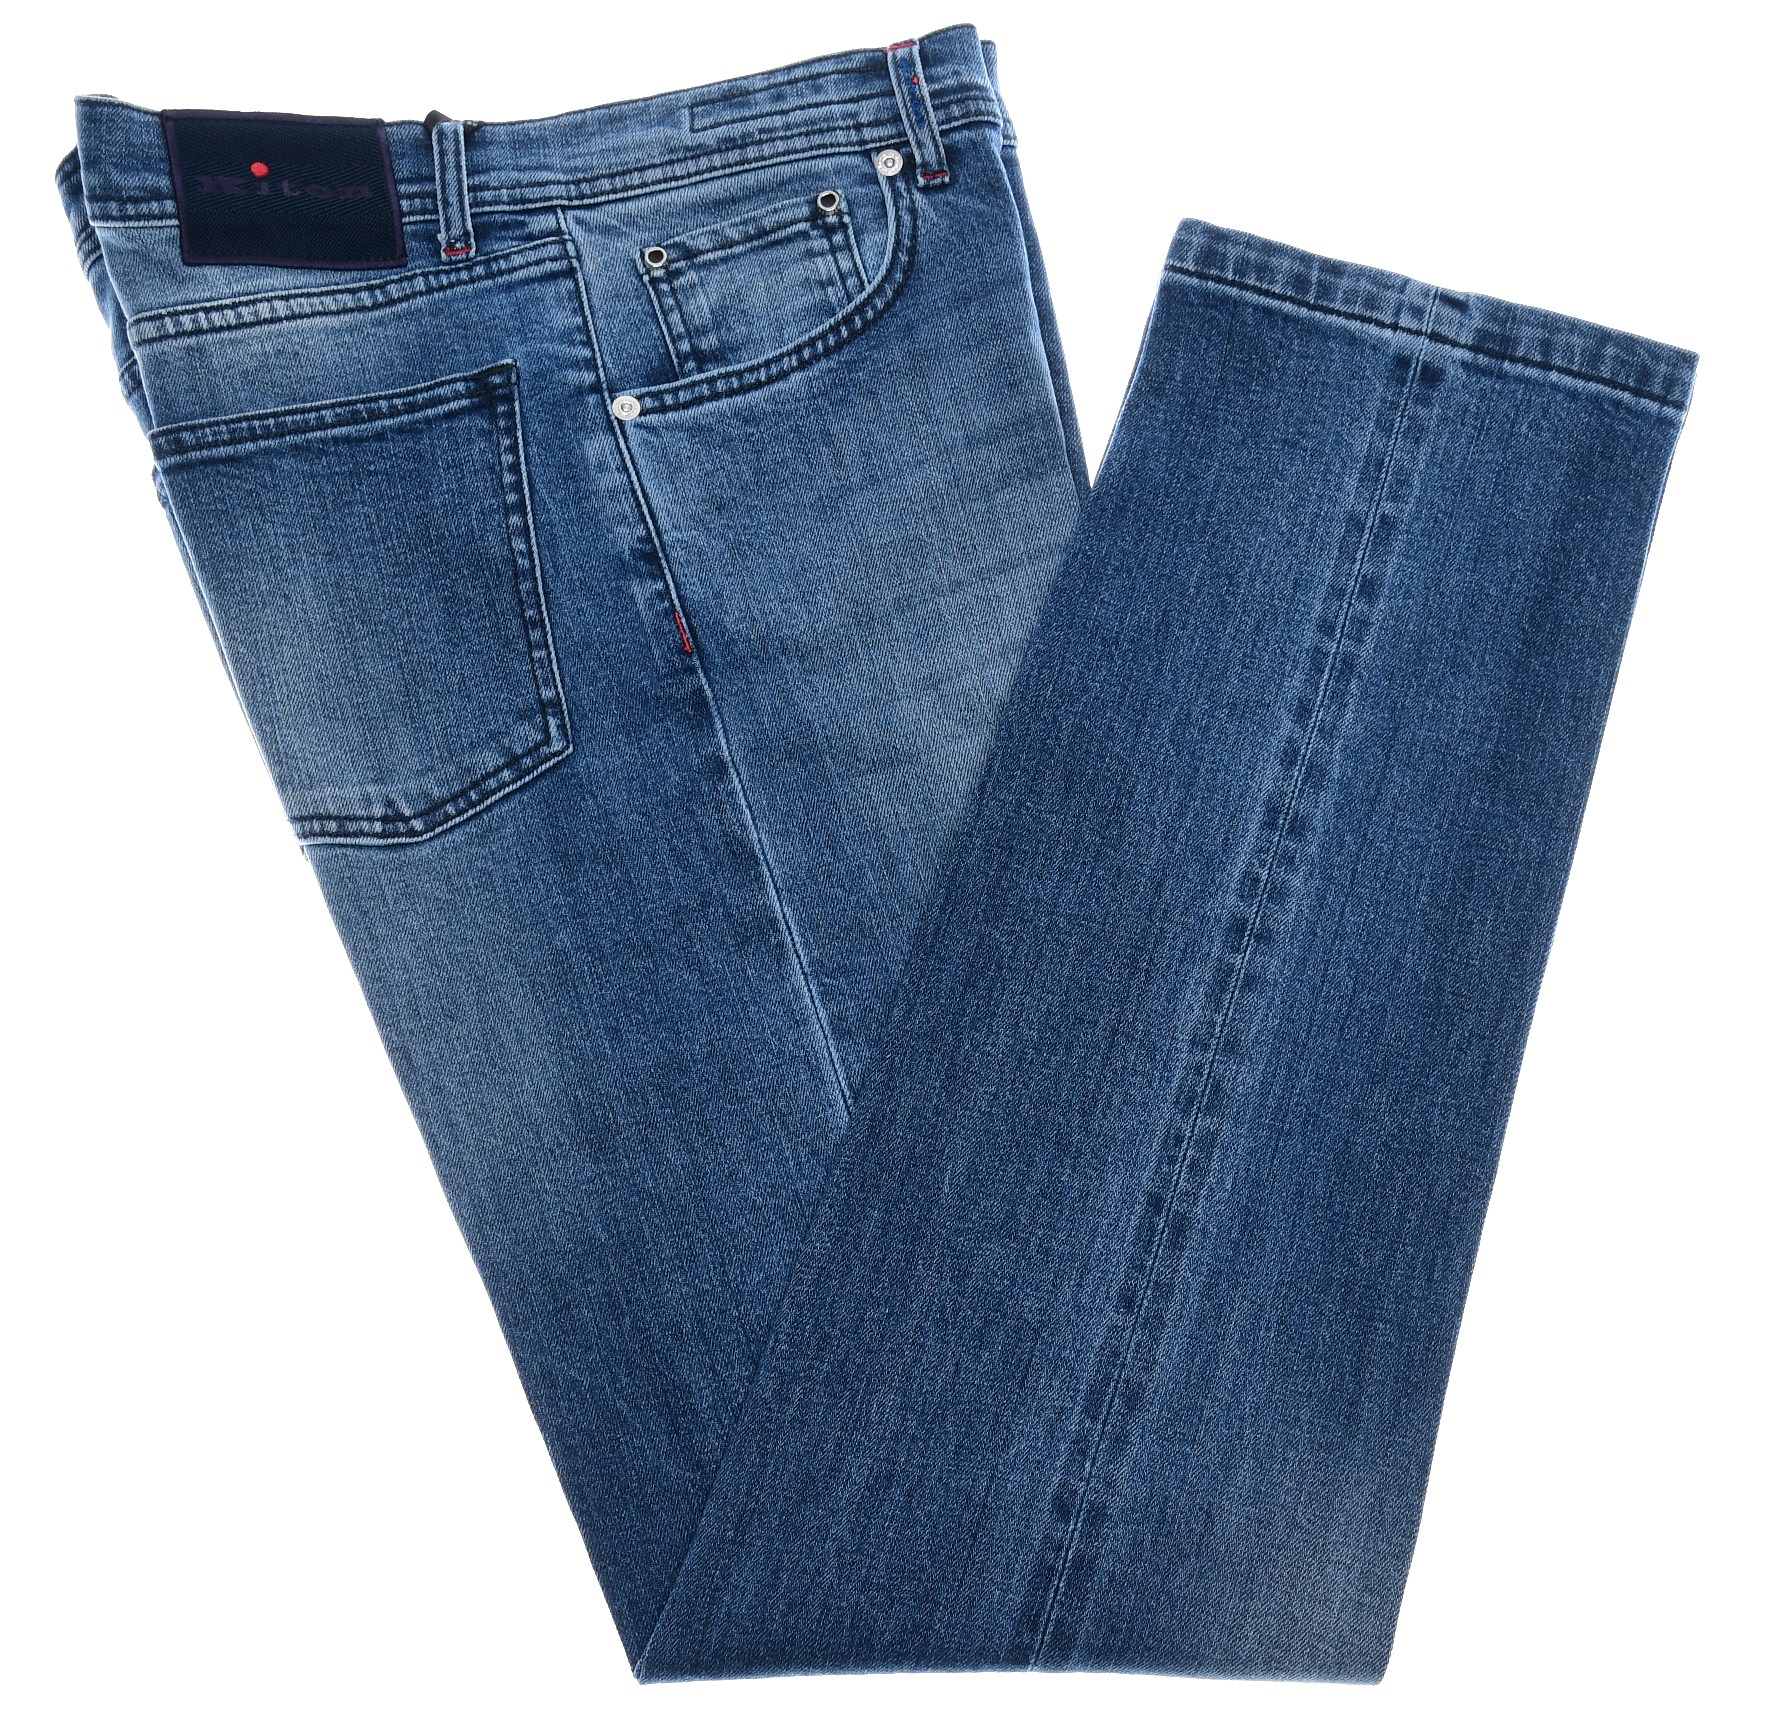 Kiton Napoli Jeans Selvedge Denim Cotton Stretch Size 33 Blue